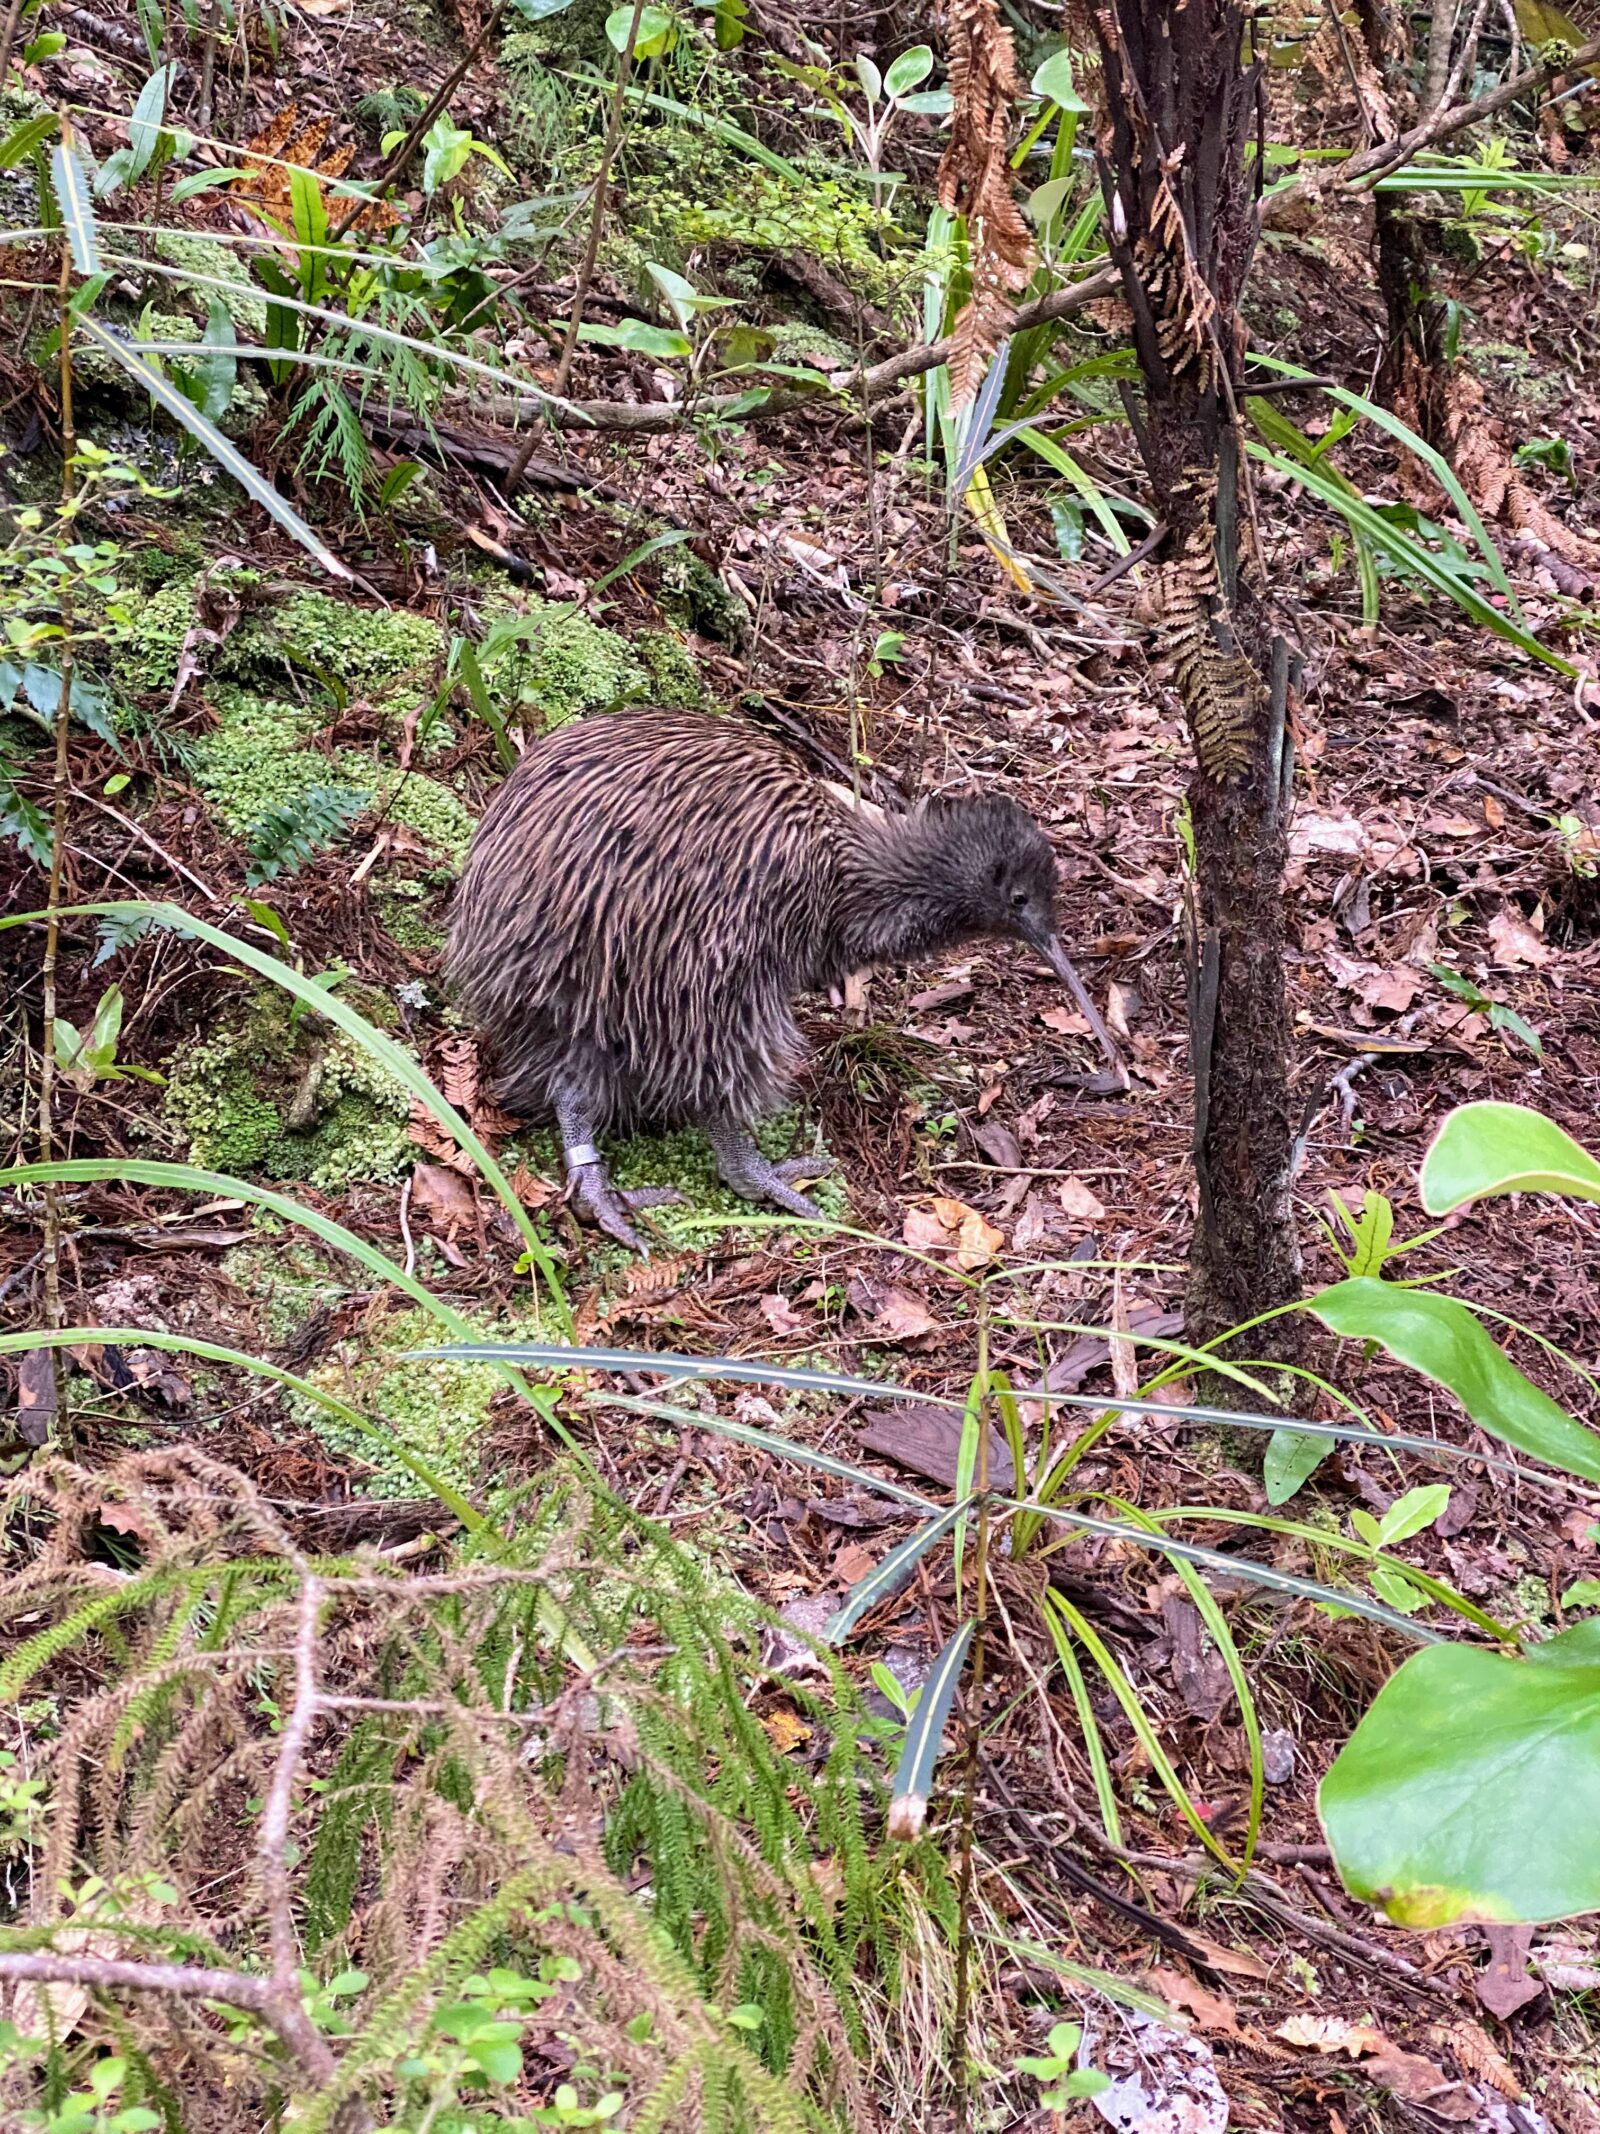 Stewart Island tokoeka / Southern brown kiwi